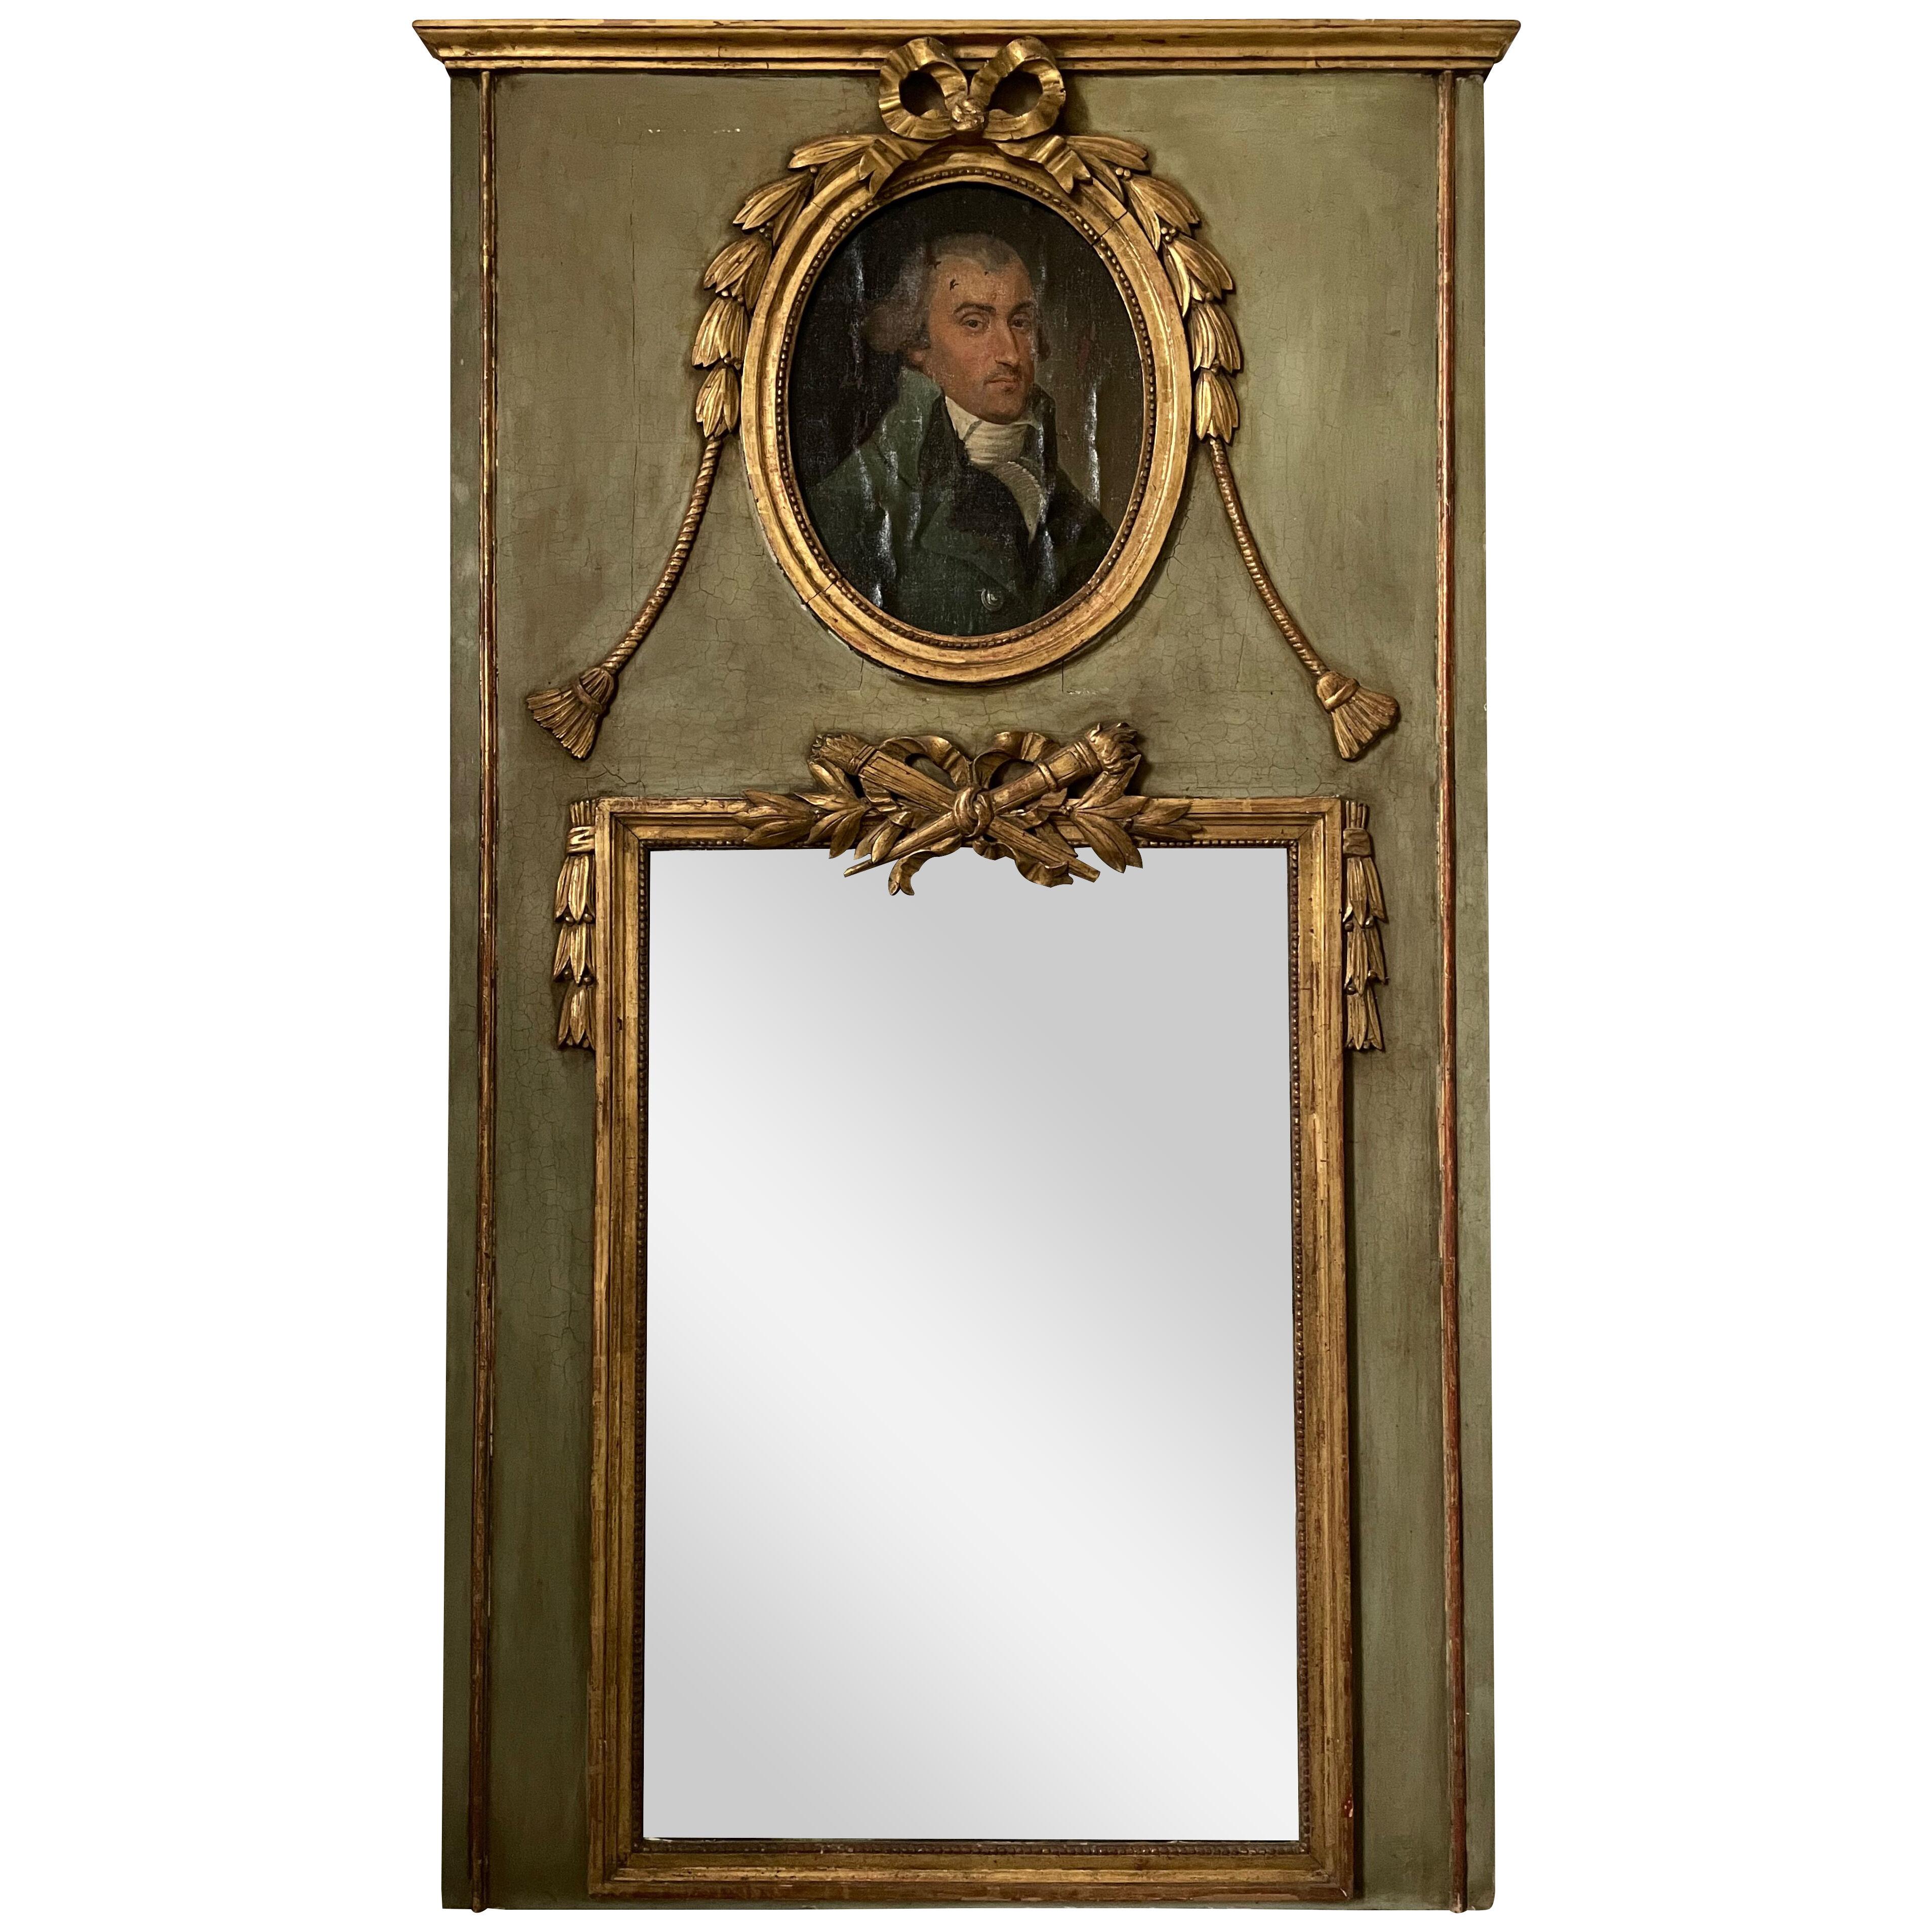 18th century Louis XVI mirror trumeau